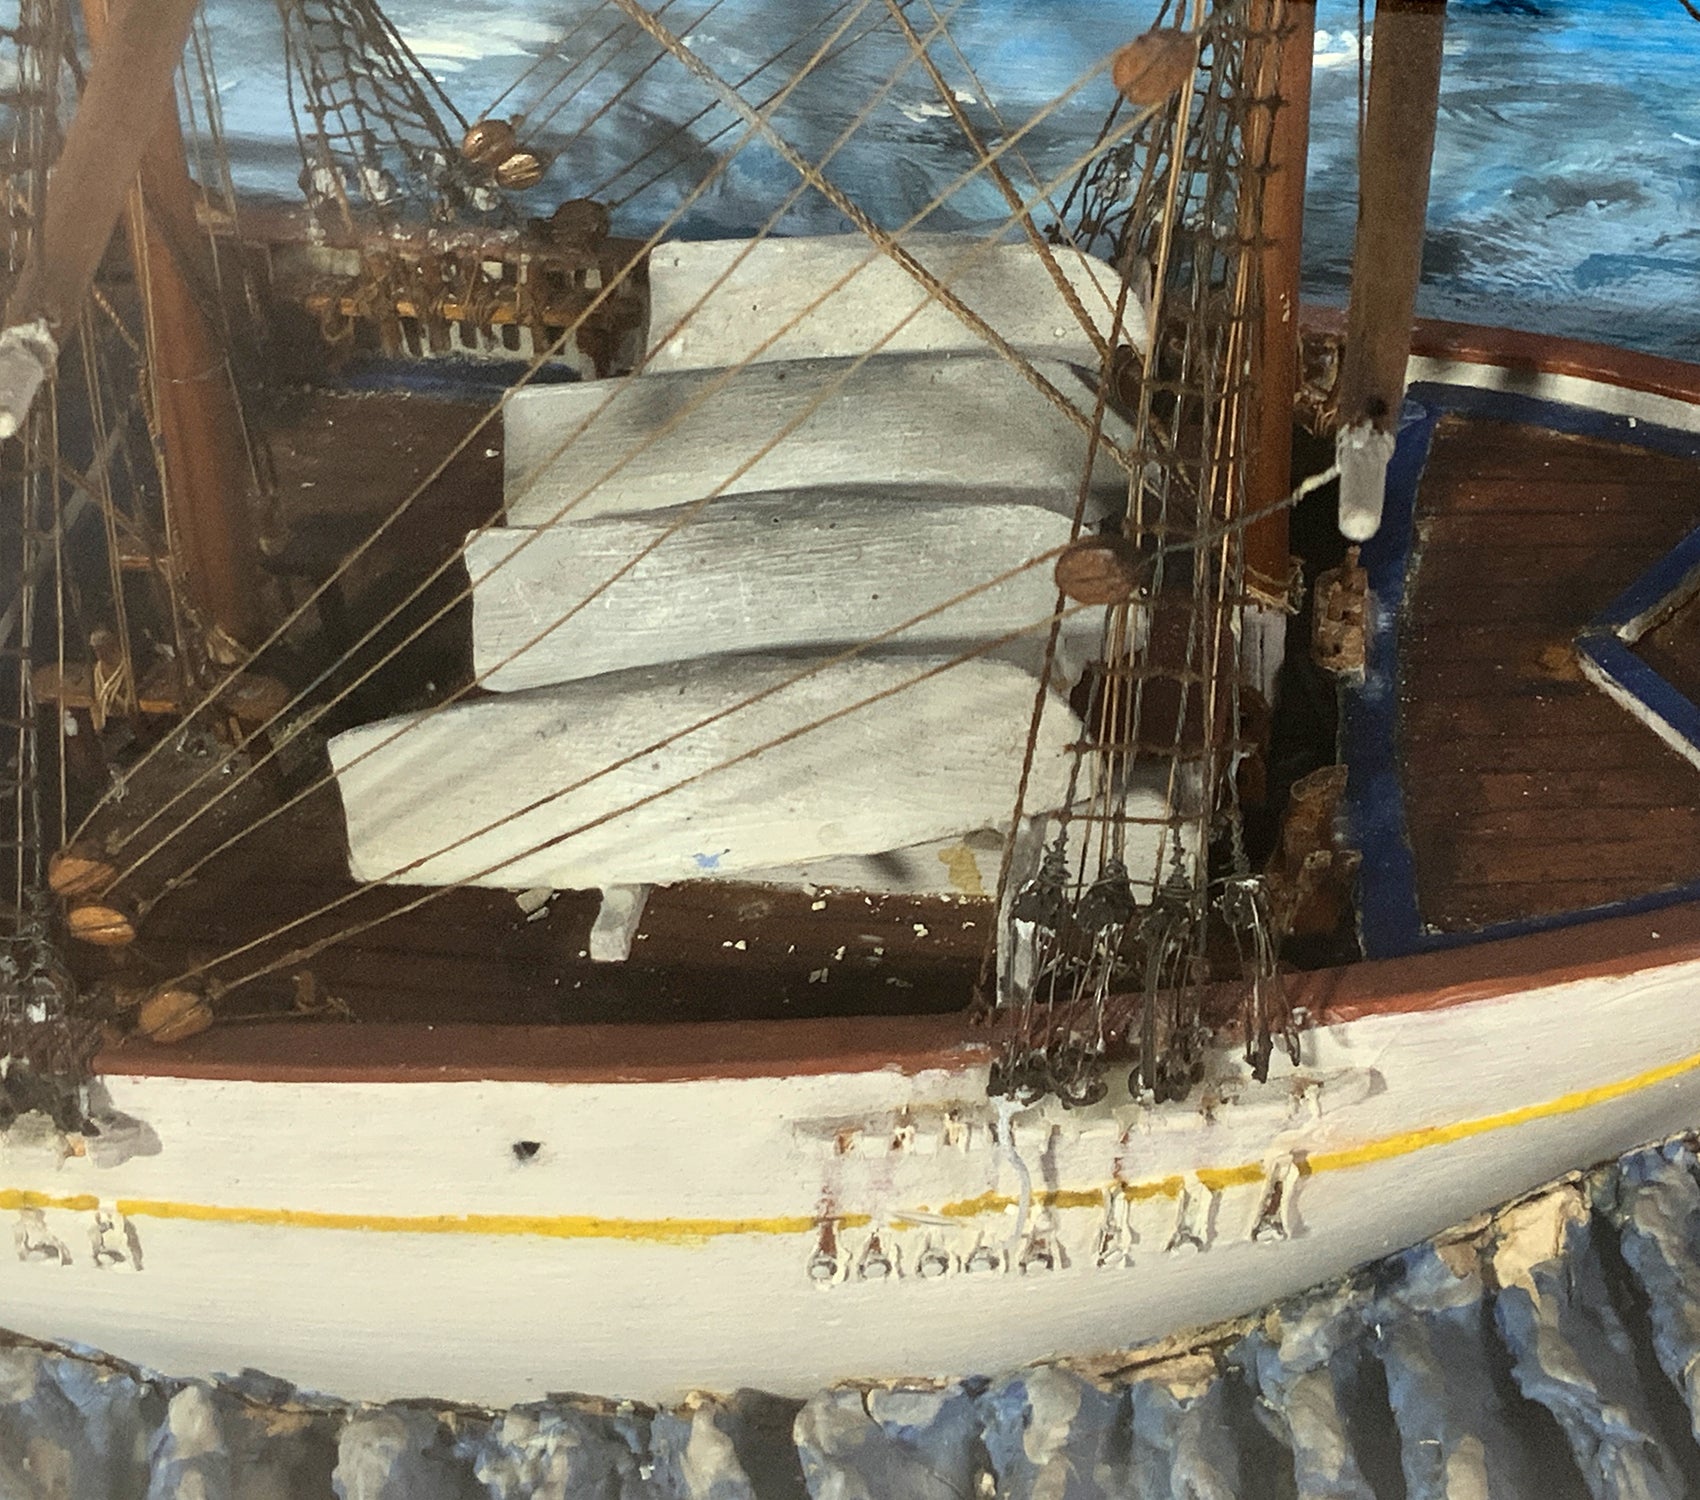 Windjammer Ship Model Diorama - Lannan Gallery